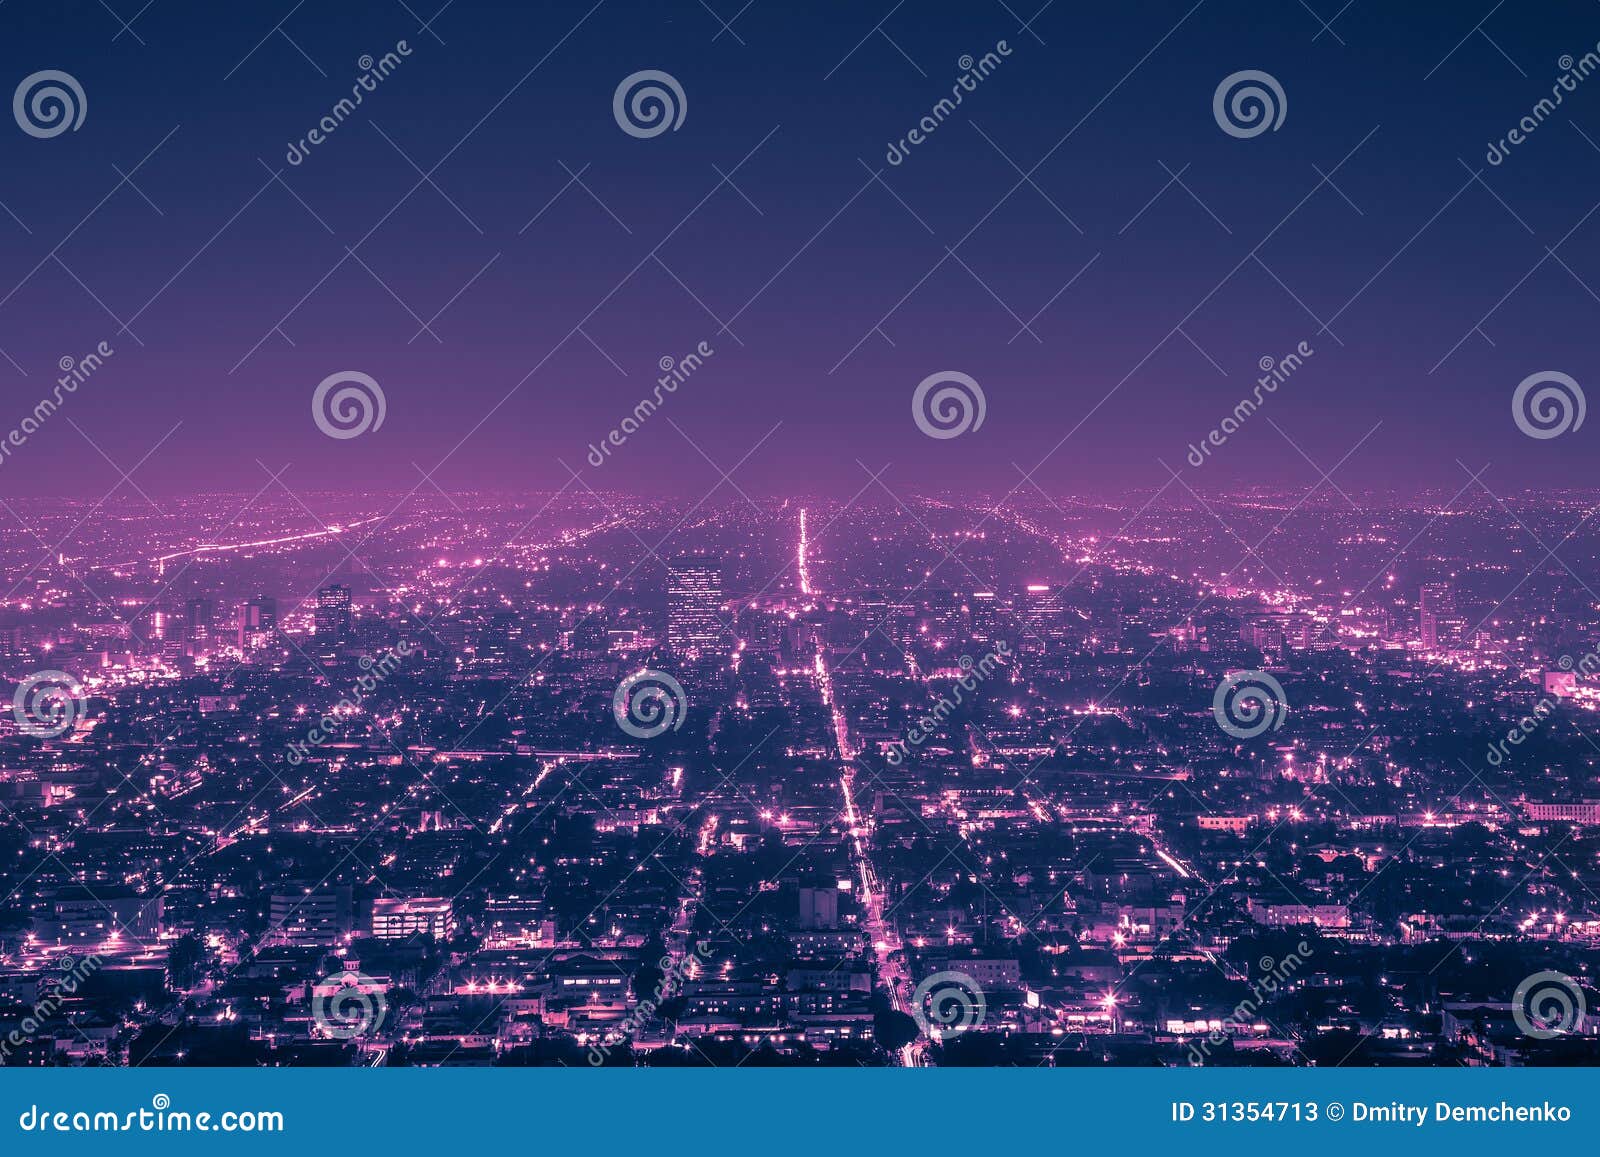 Los Angeles at Night stock image. Image of lights, night - 31354713